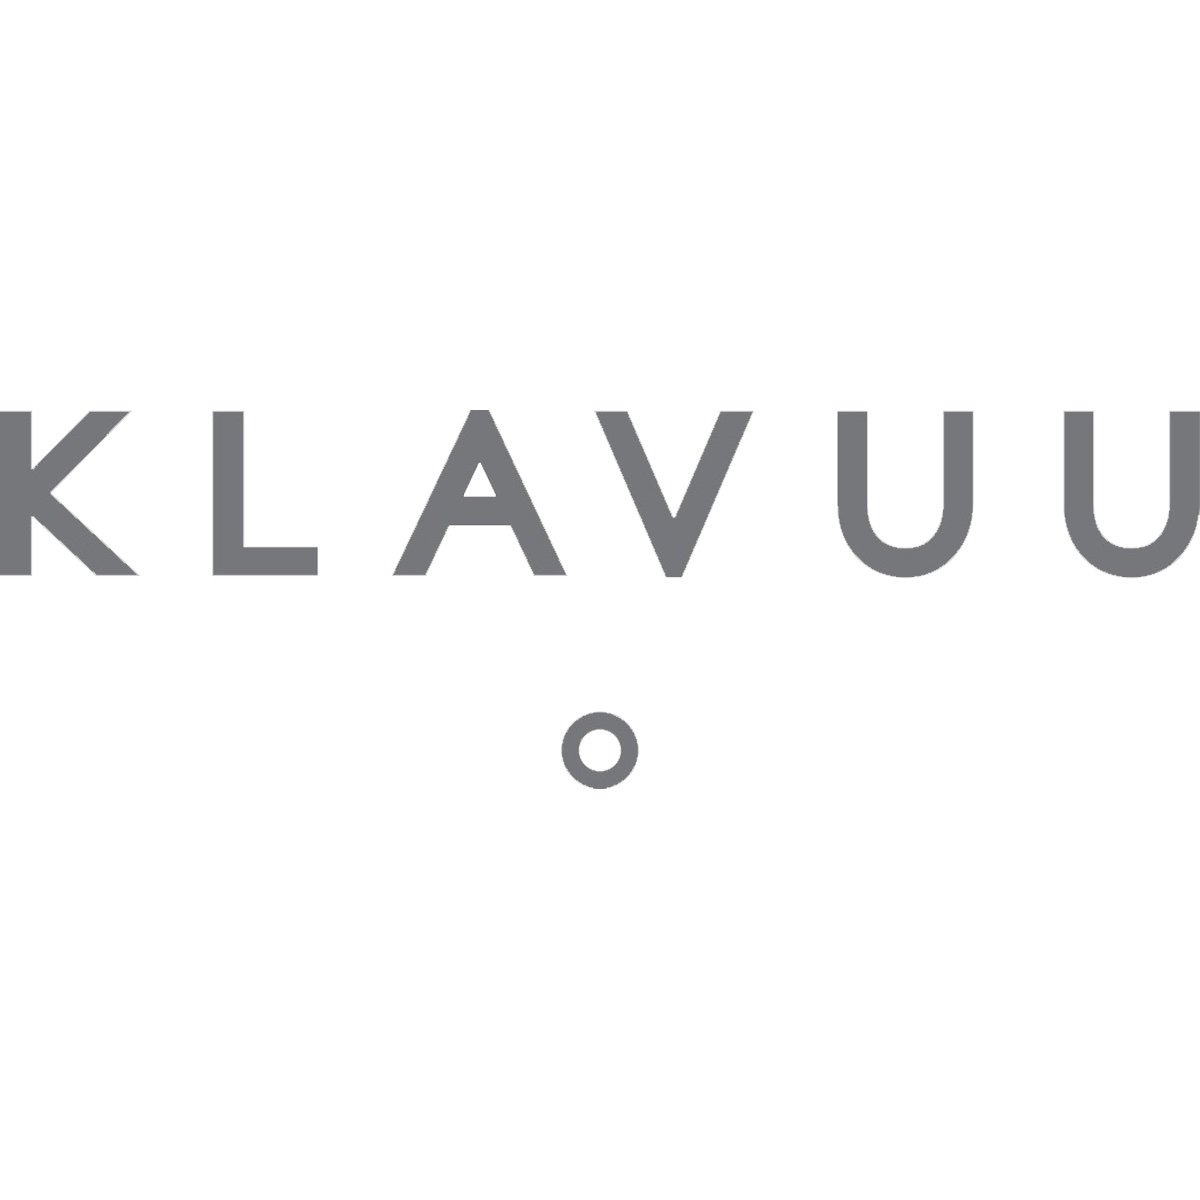 Klavuu logo